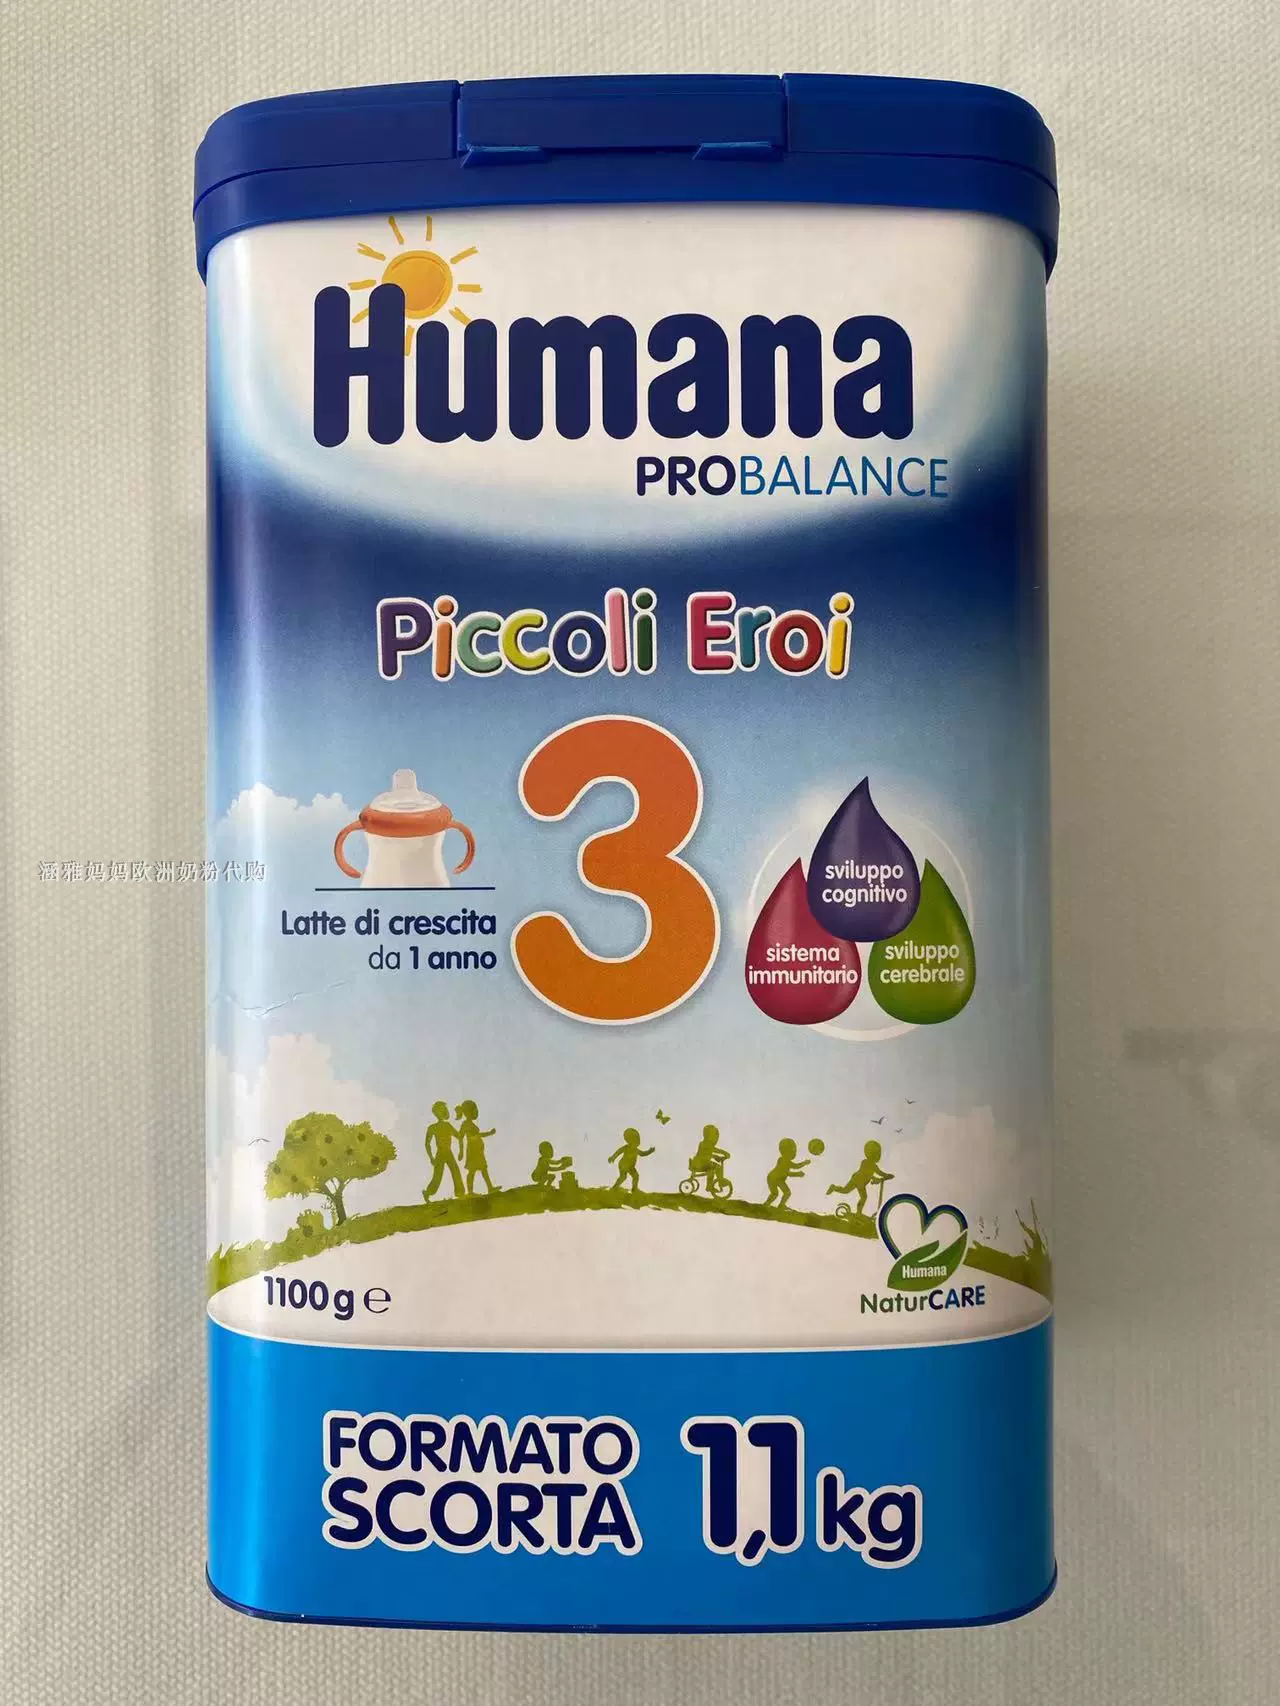 意大利Humana瑚-Taobao